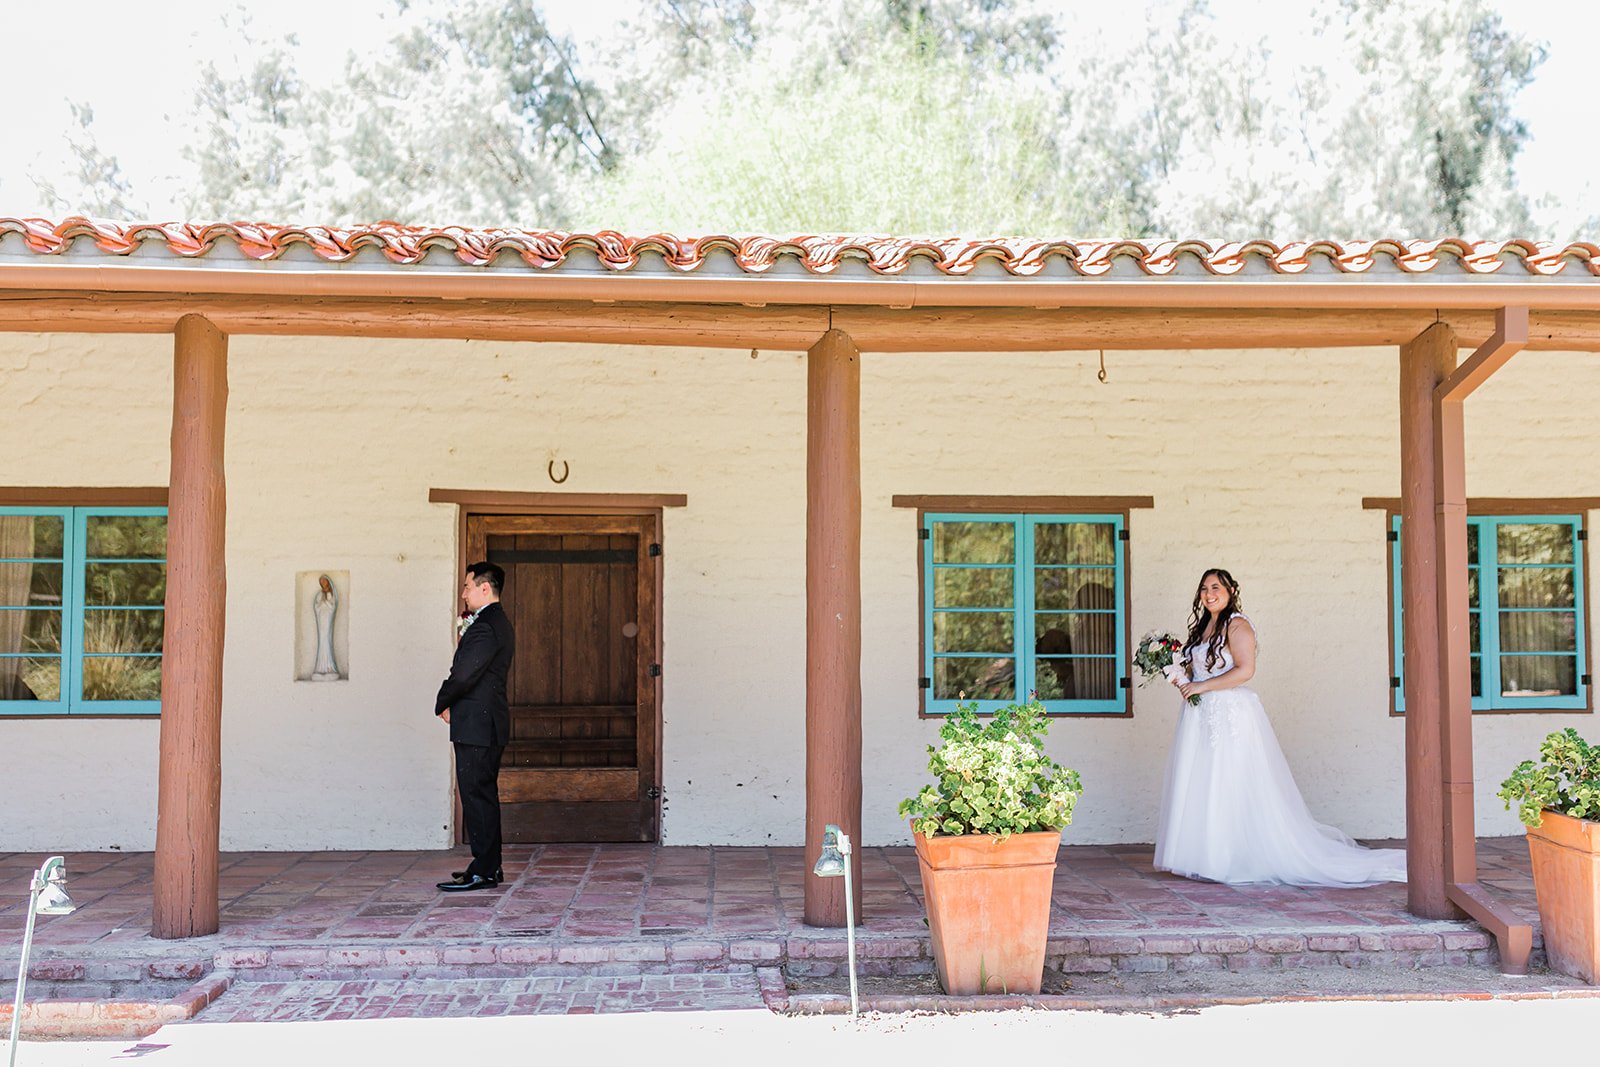 Wedding day first look at Tesoro Adobe Historic Park in Santa Clarita